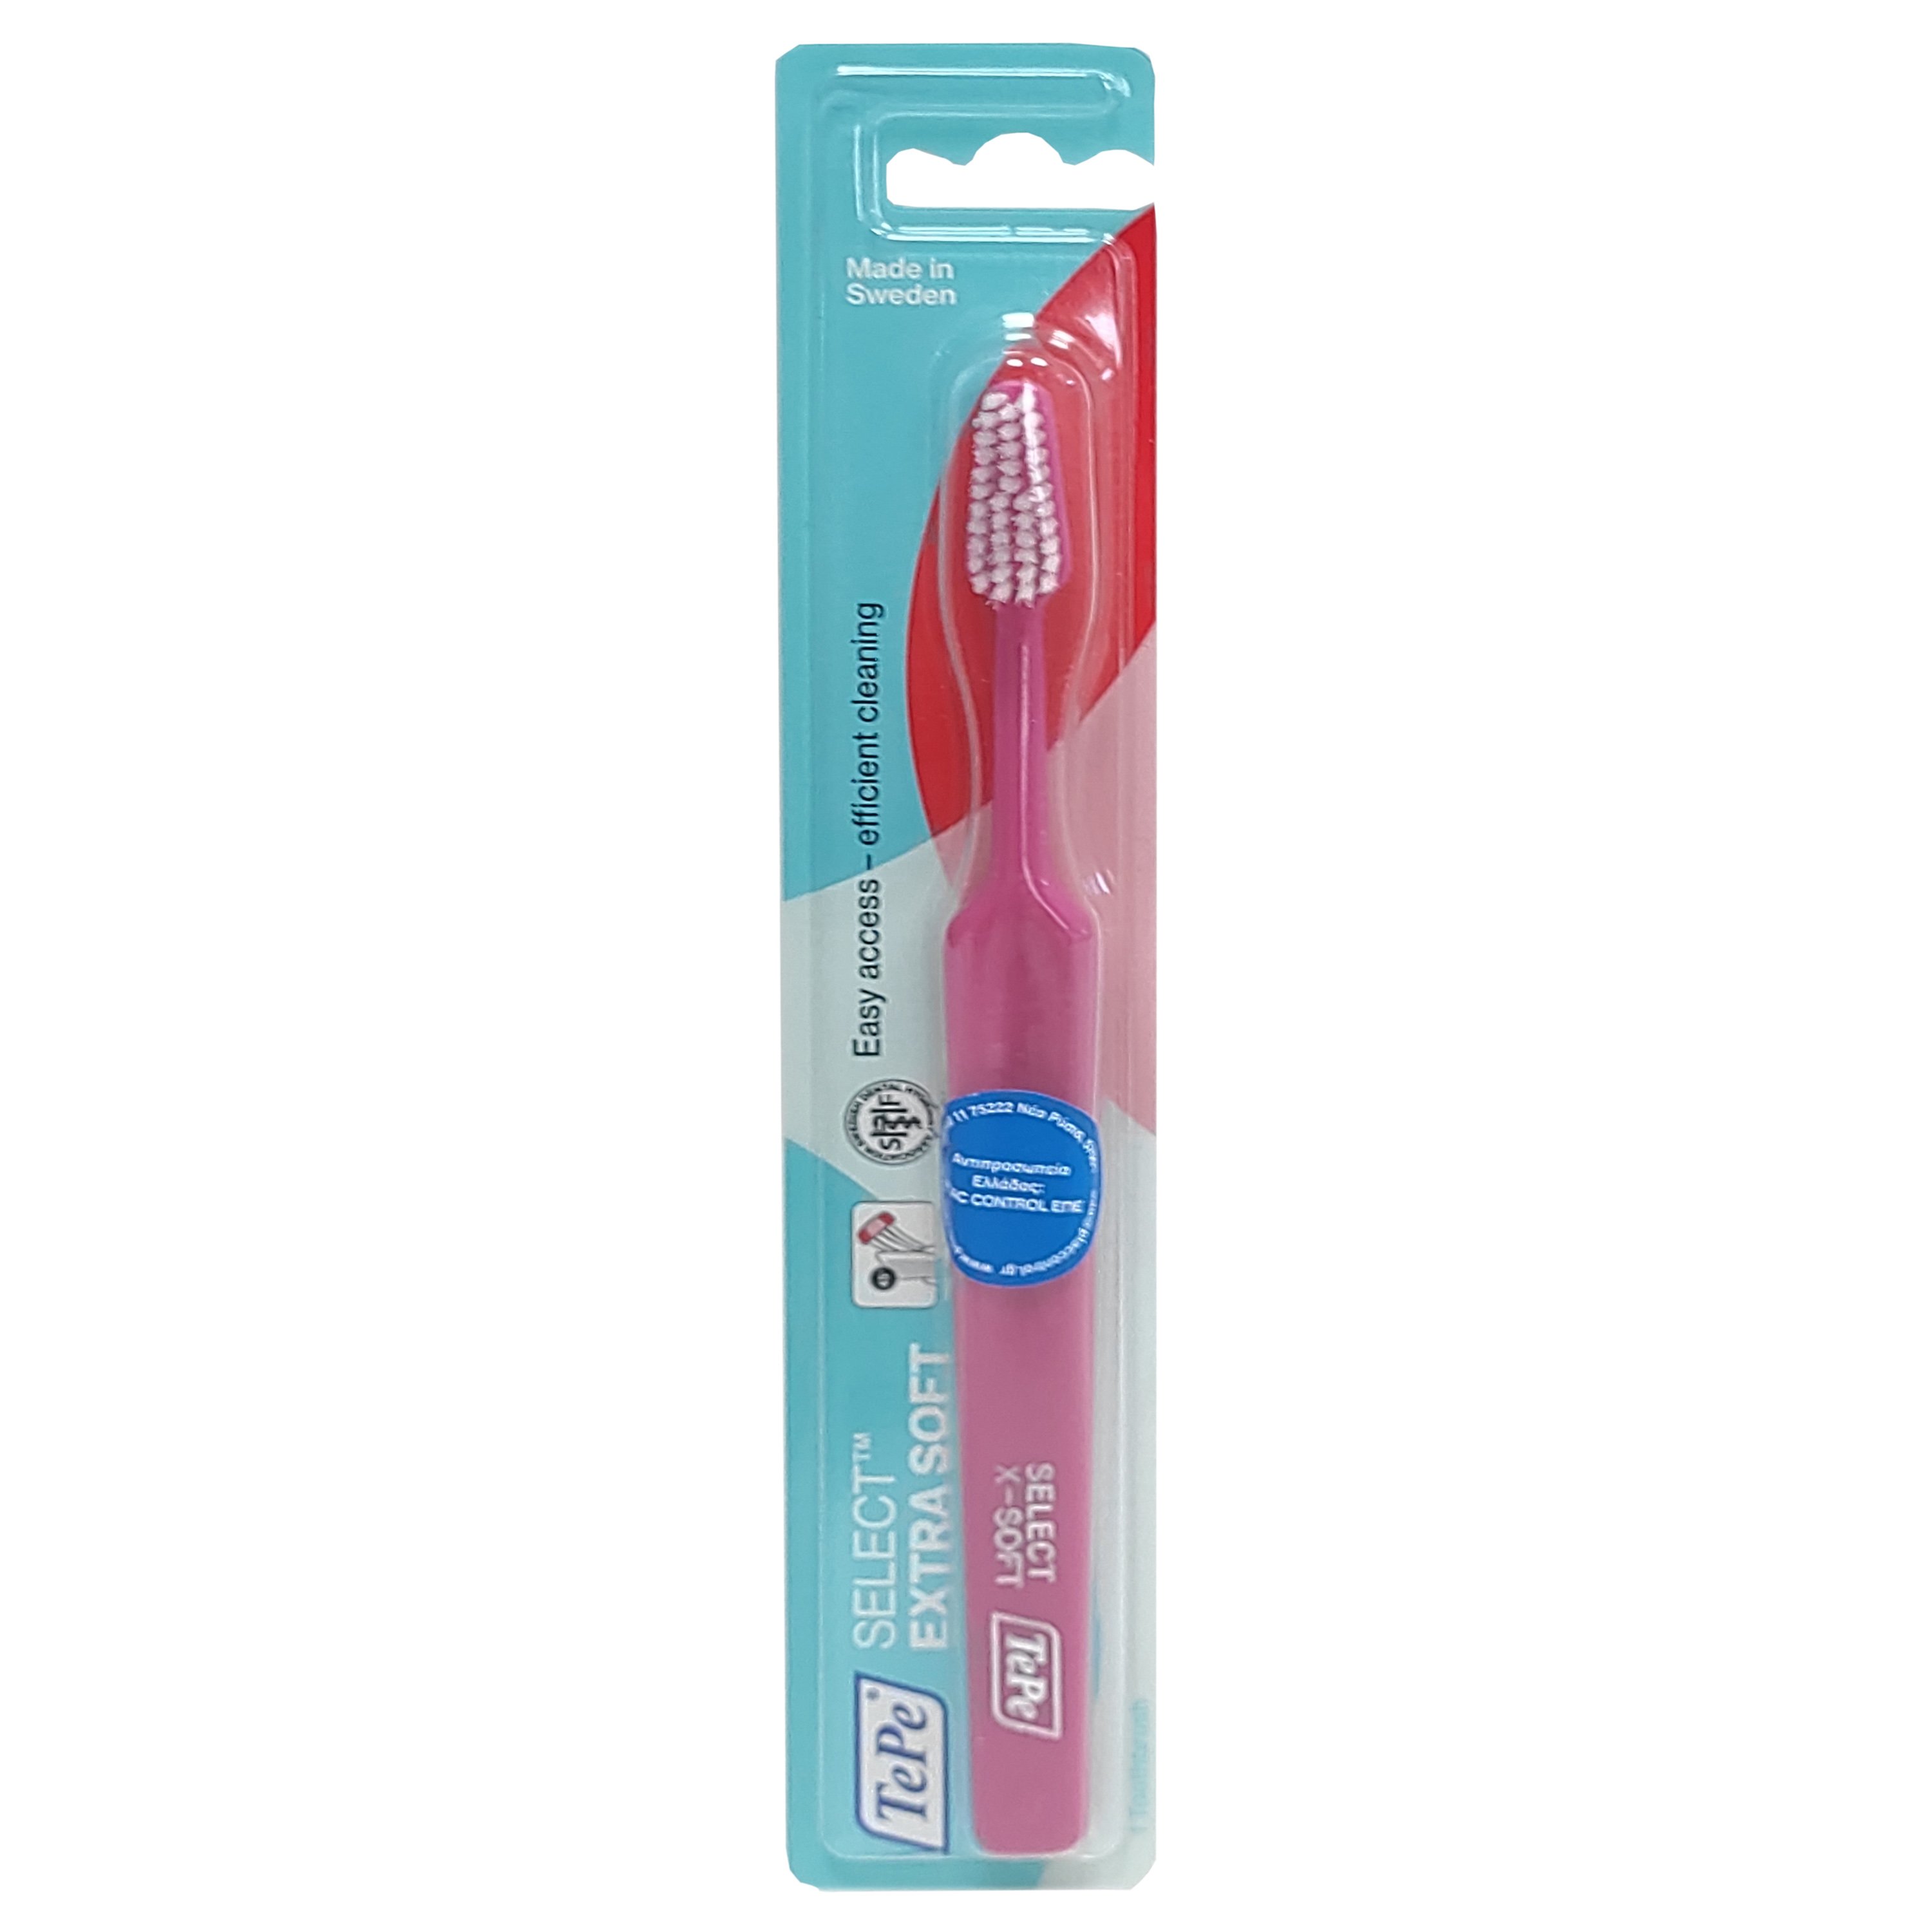 Tepe Select Extra Soft Οδοντόβουρτσα Πολύ Μαλακή για Αποτελεσματικό Καθαρισμό & Προστασία των Ούλων 1 Τεμάχιο – φούξια